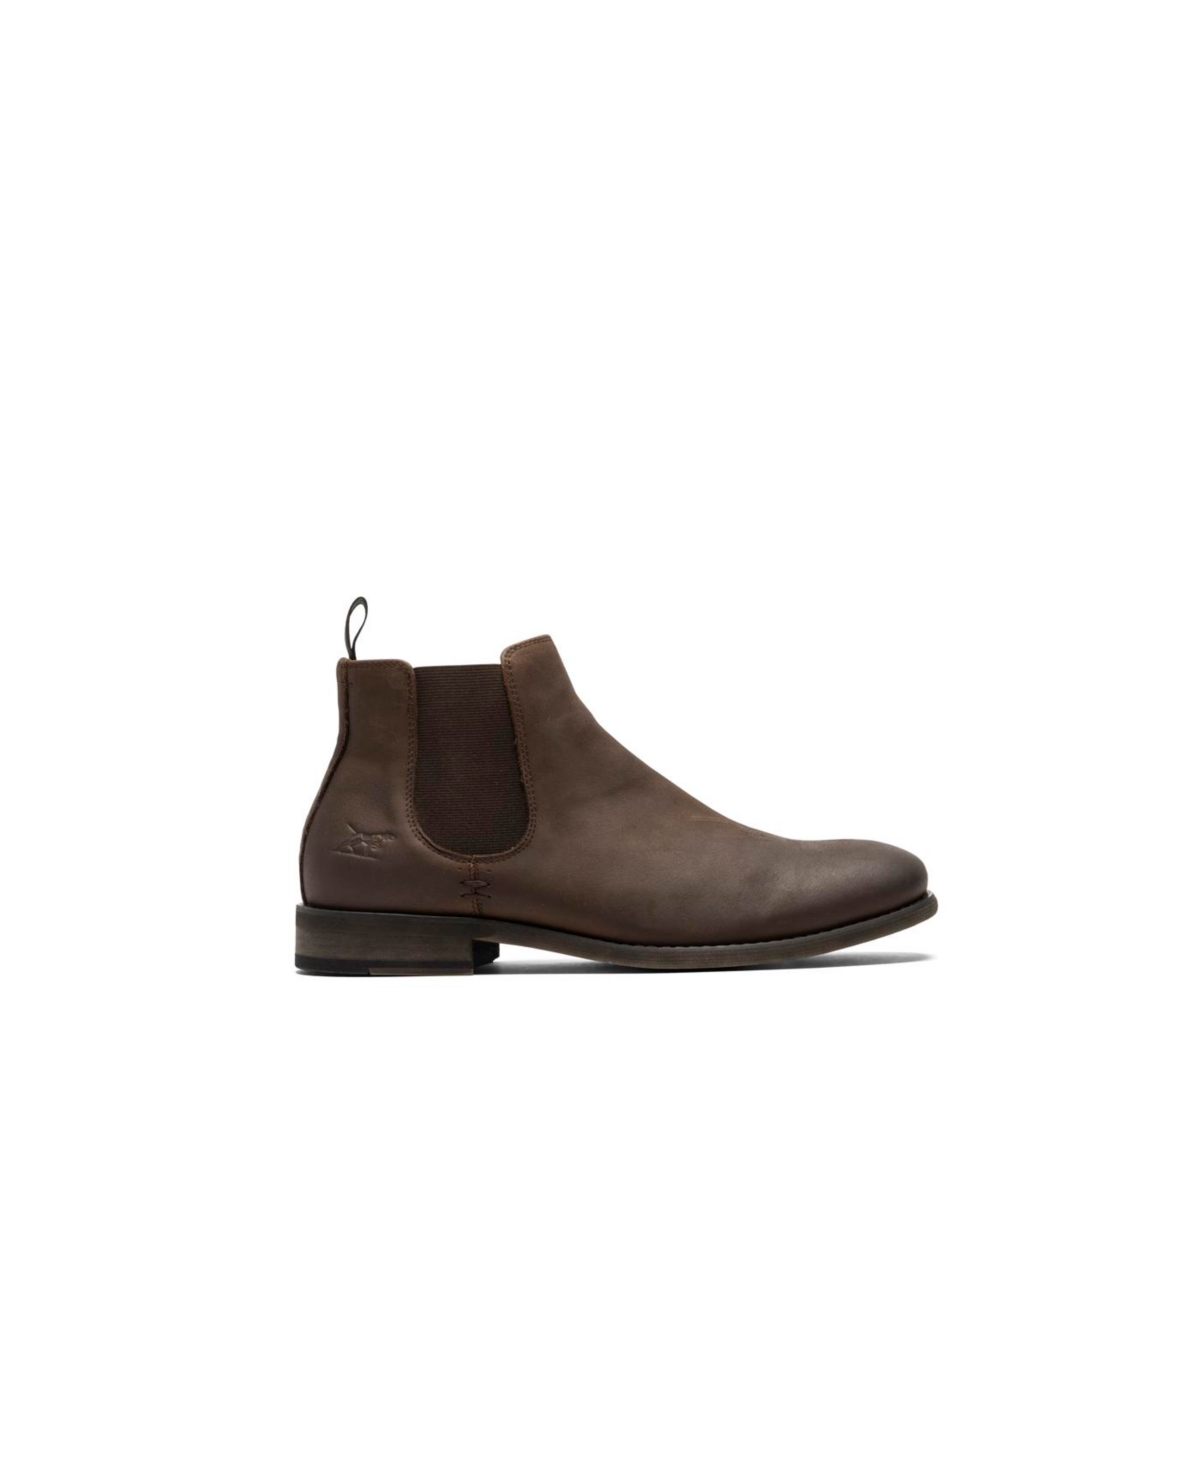 Men's Ealing Chelsea Boot - Taupe brown